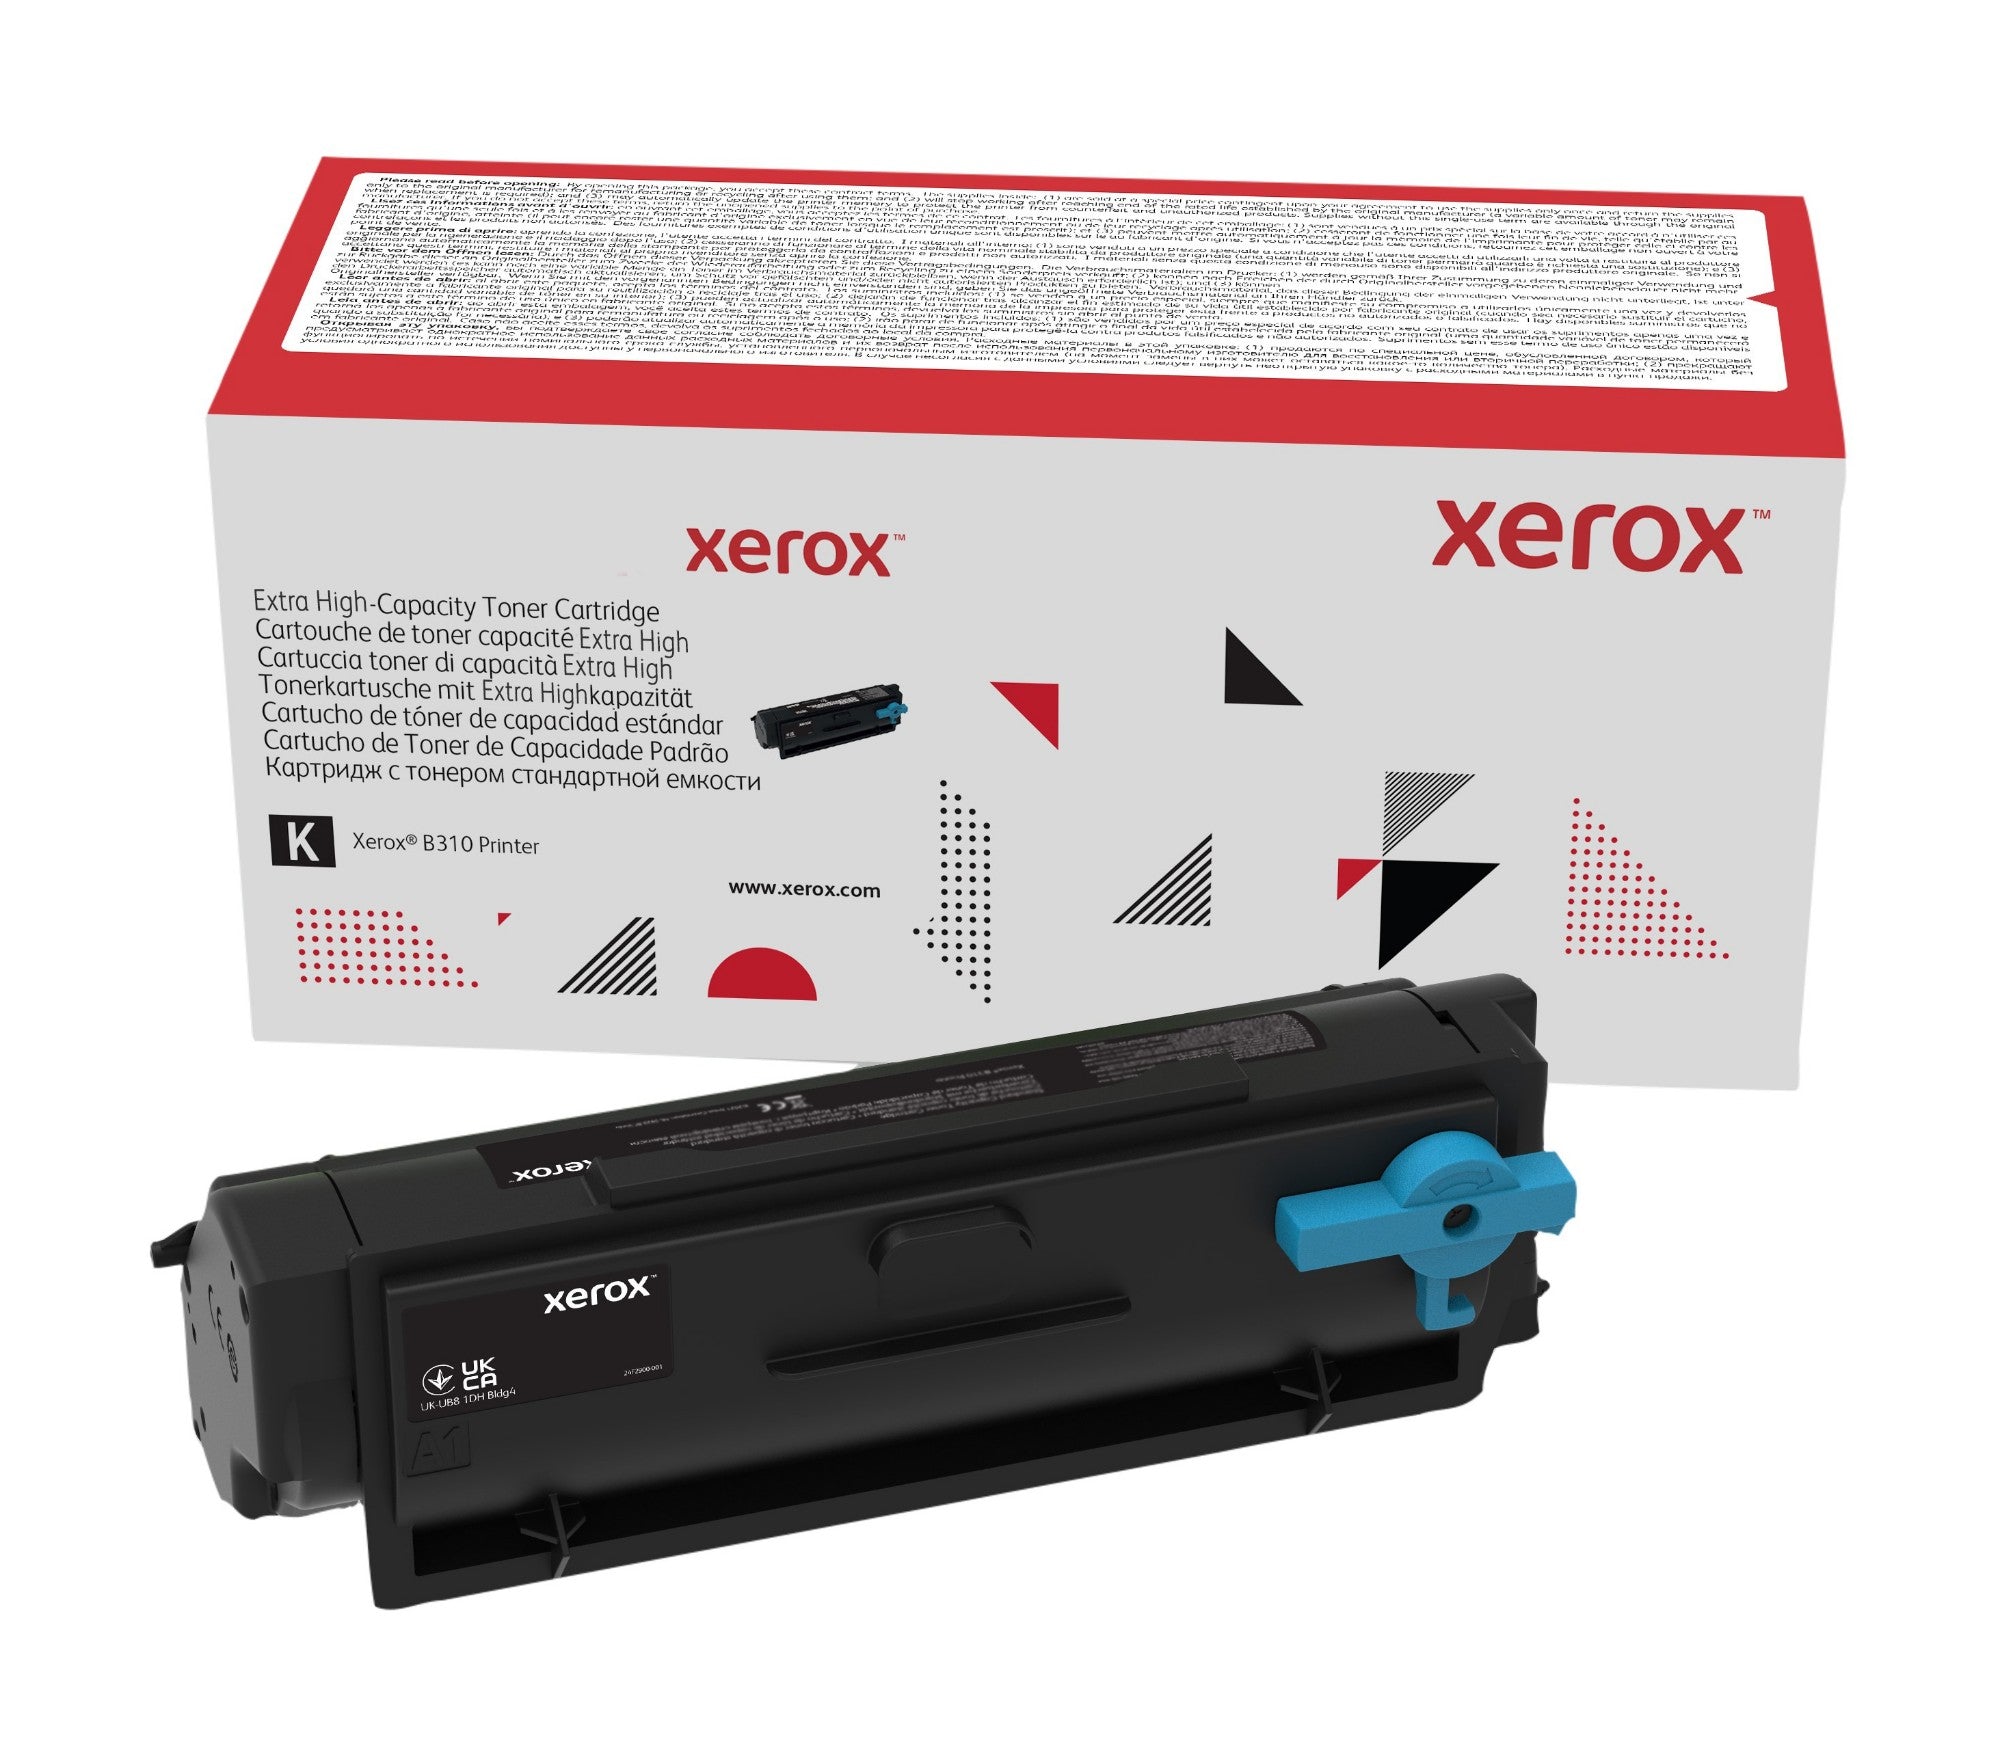 Xerox 006R04378 Toner-kit extra High-Capacity, 20K pages ISO/IEC 19752 for Xerox B 310